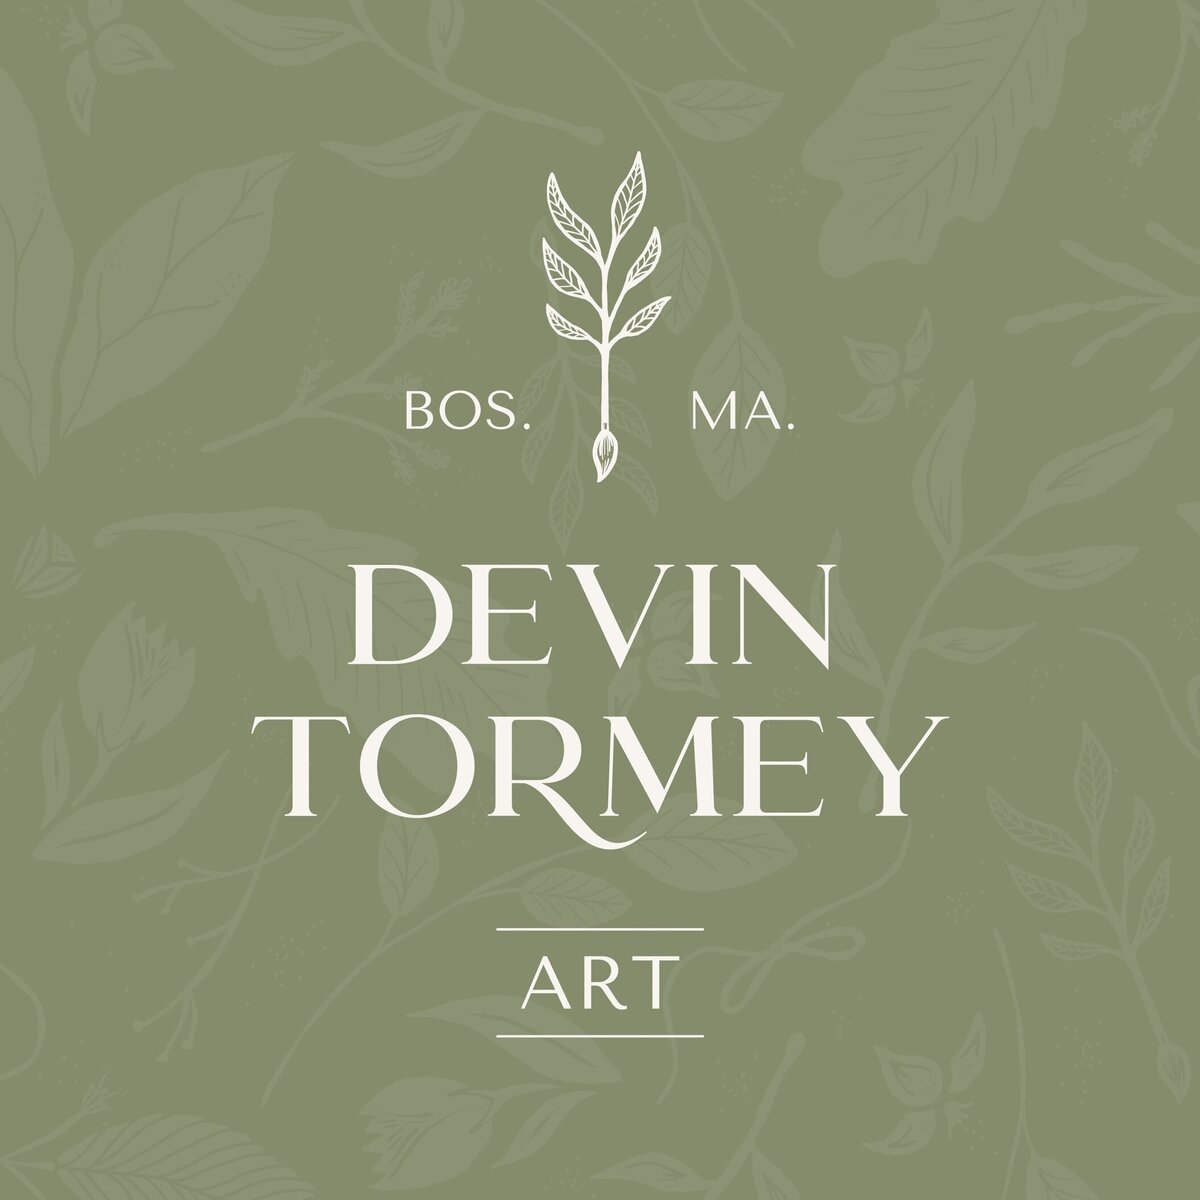 Devin tormey art primary logo on green leafy background